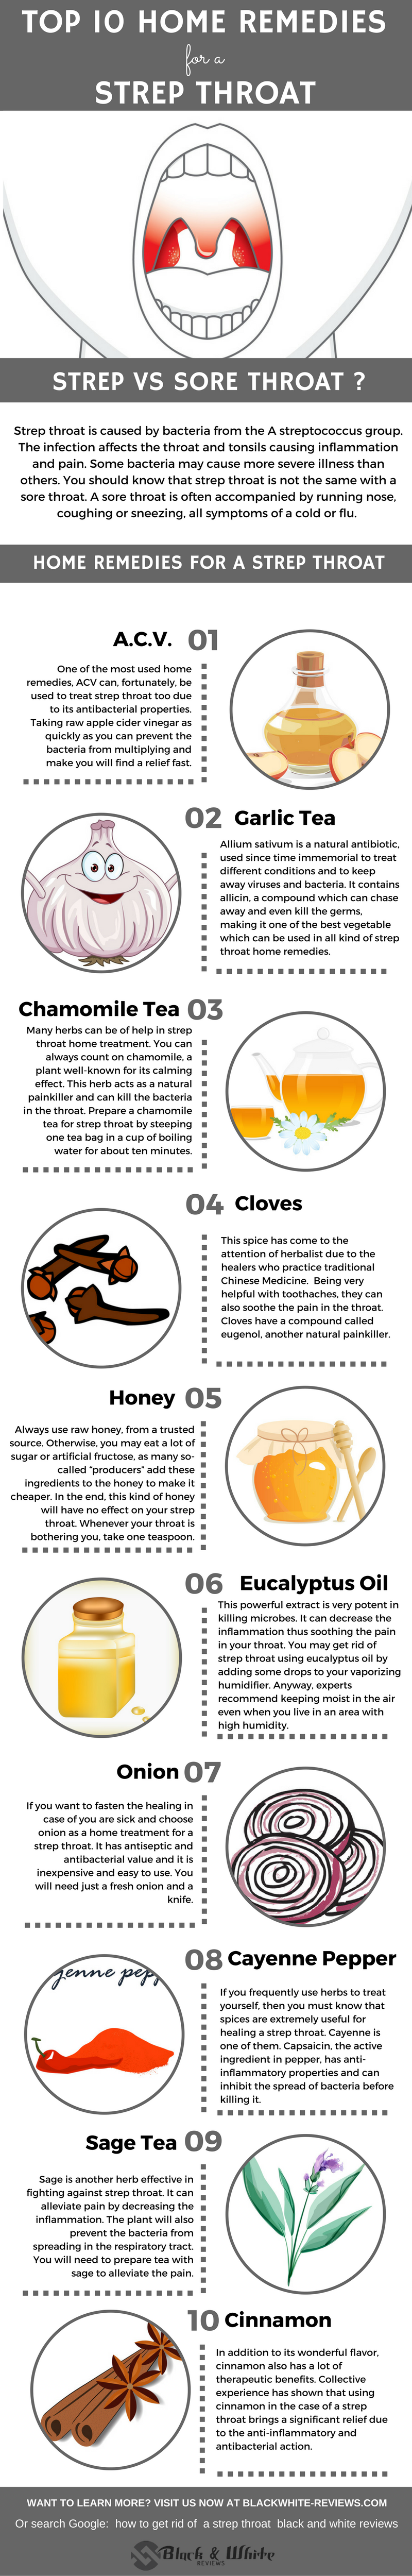 strep throat remedies- infographic